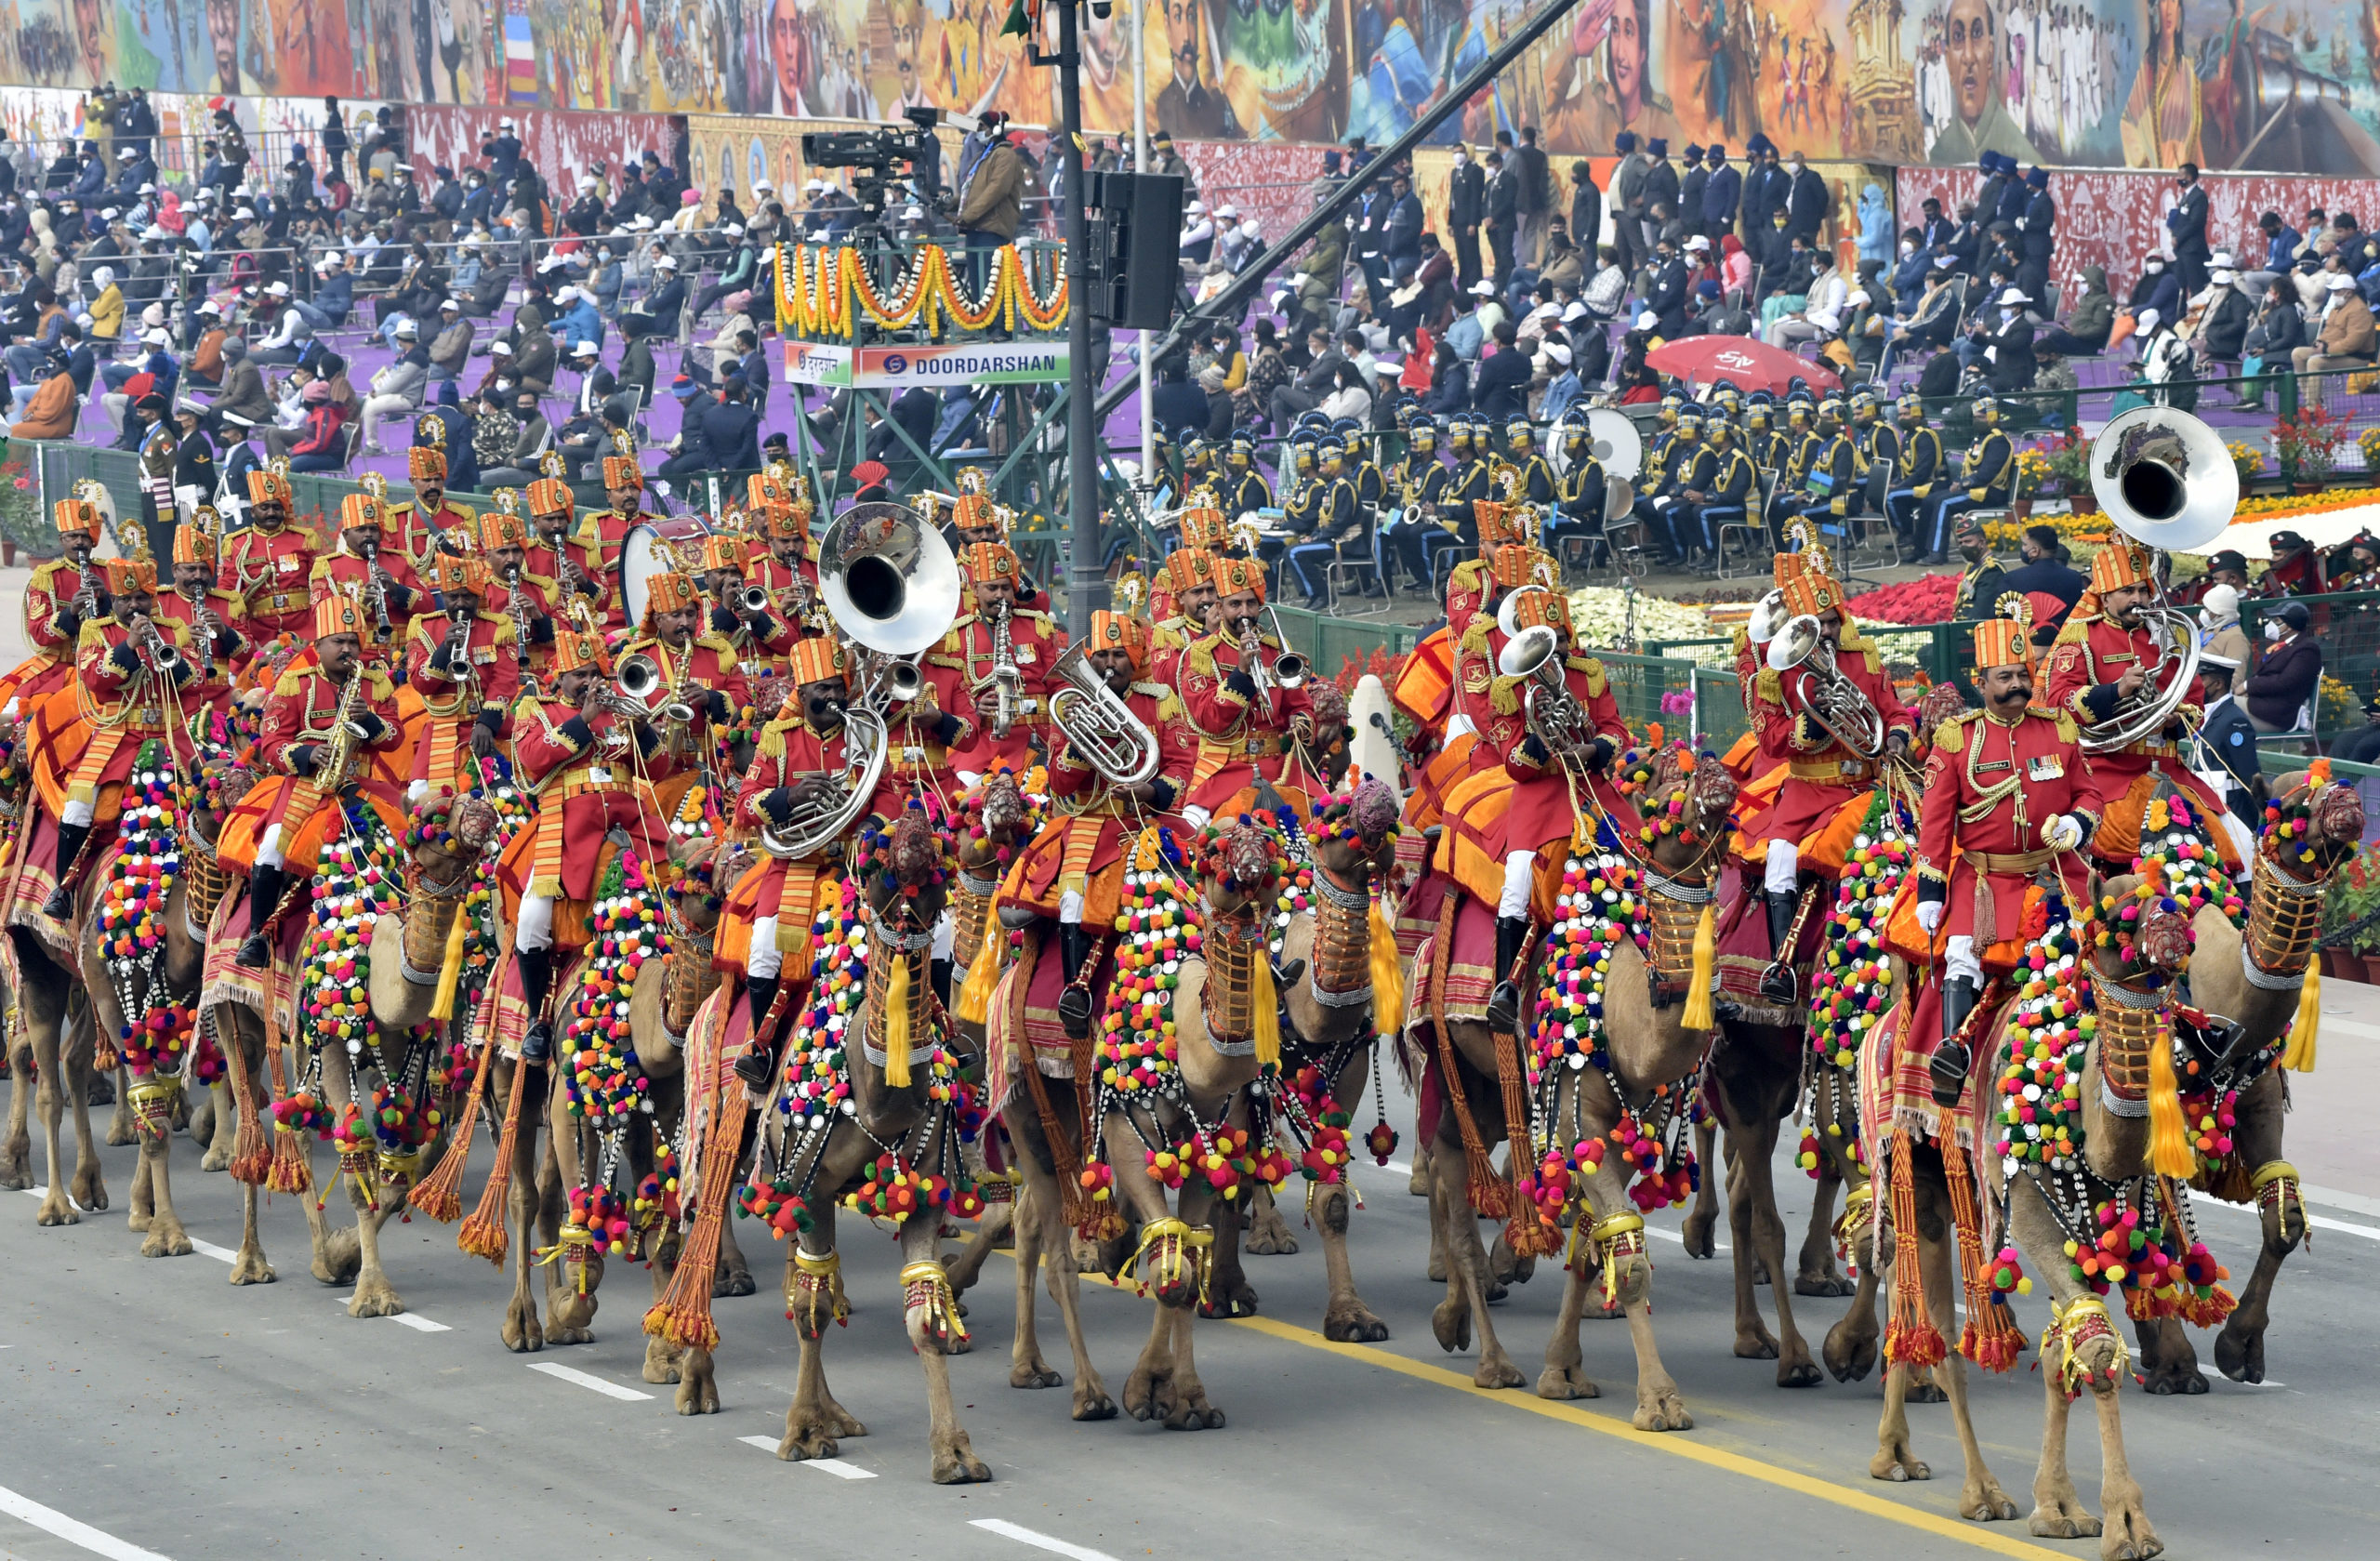 Fresh PIL alleges illegal transportation of camels for R-Day celebrations